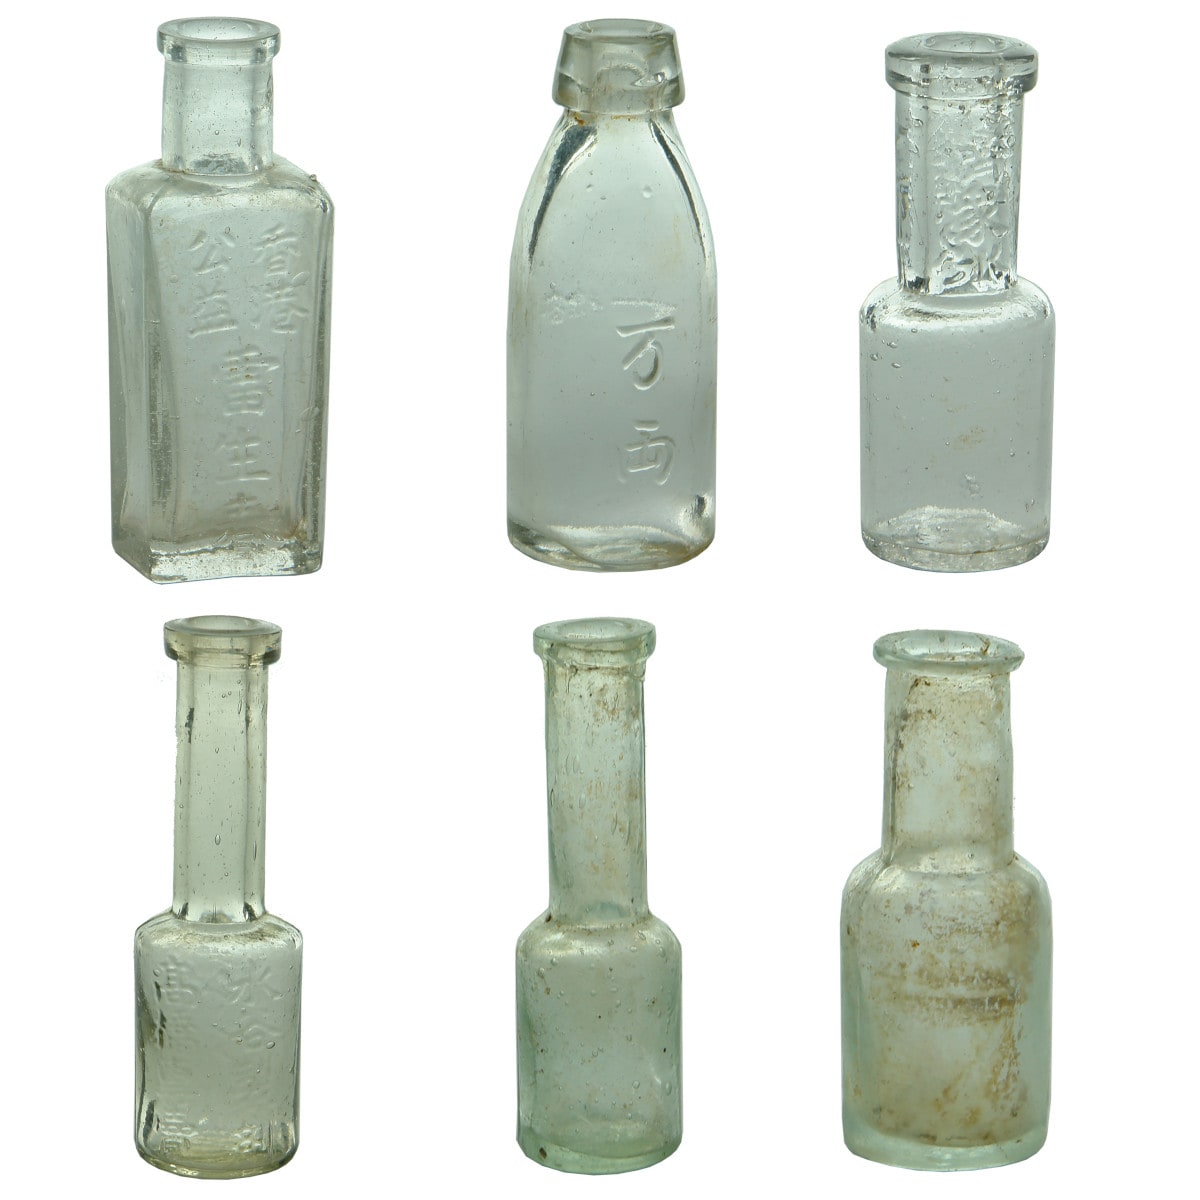 Six small Chinese/Japanese glass bottles.